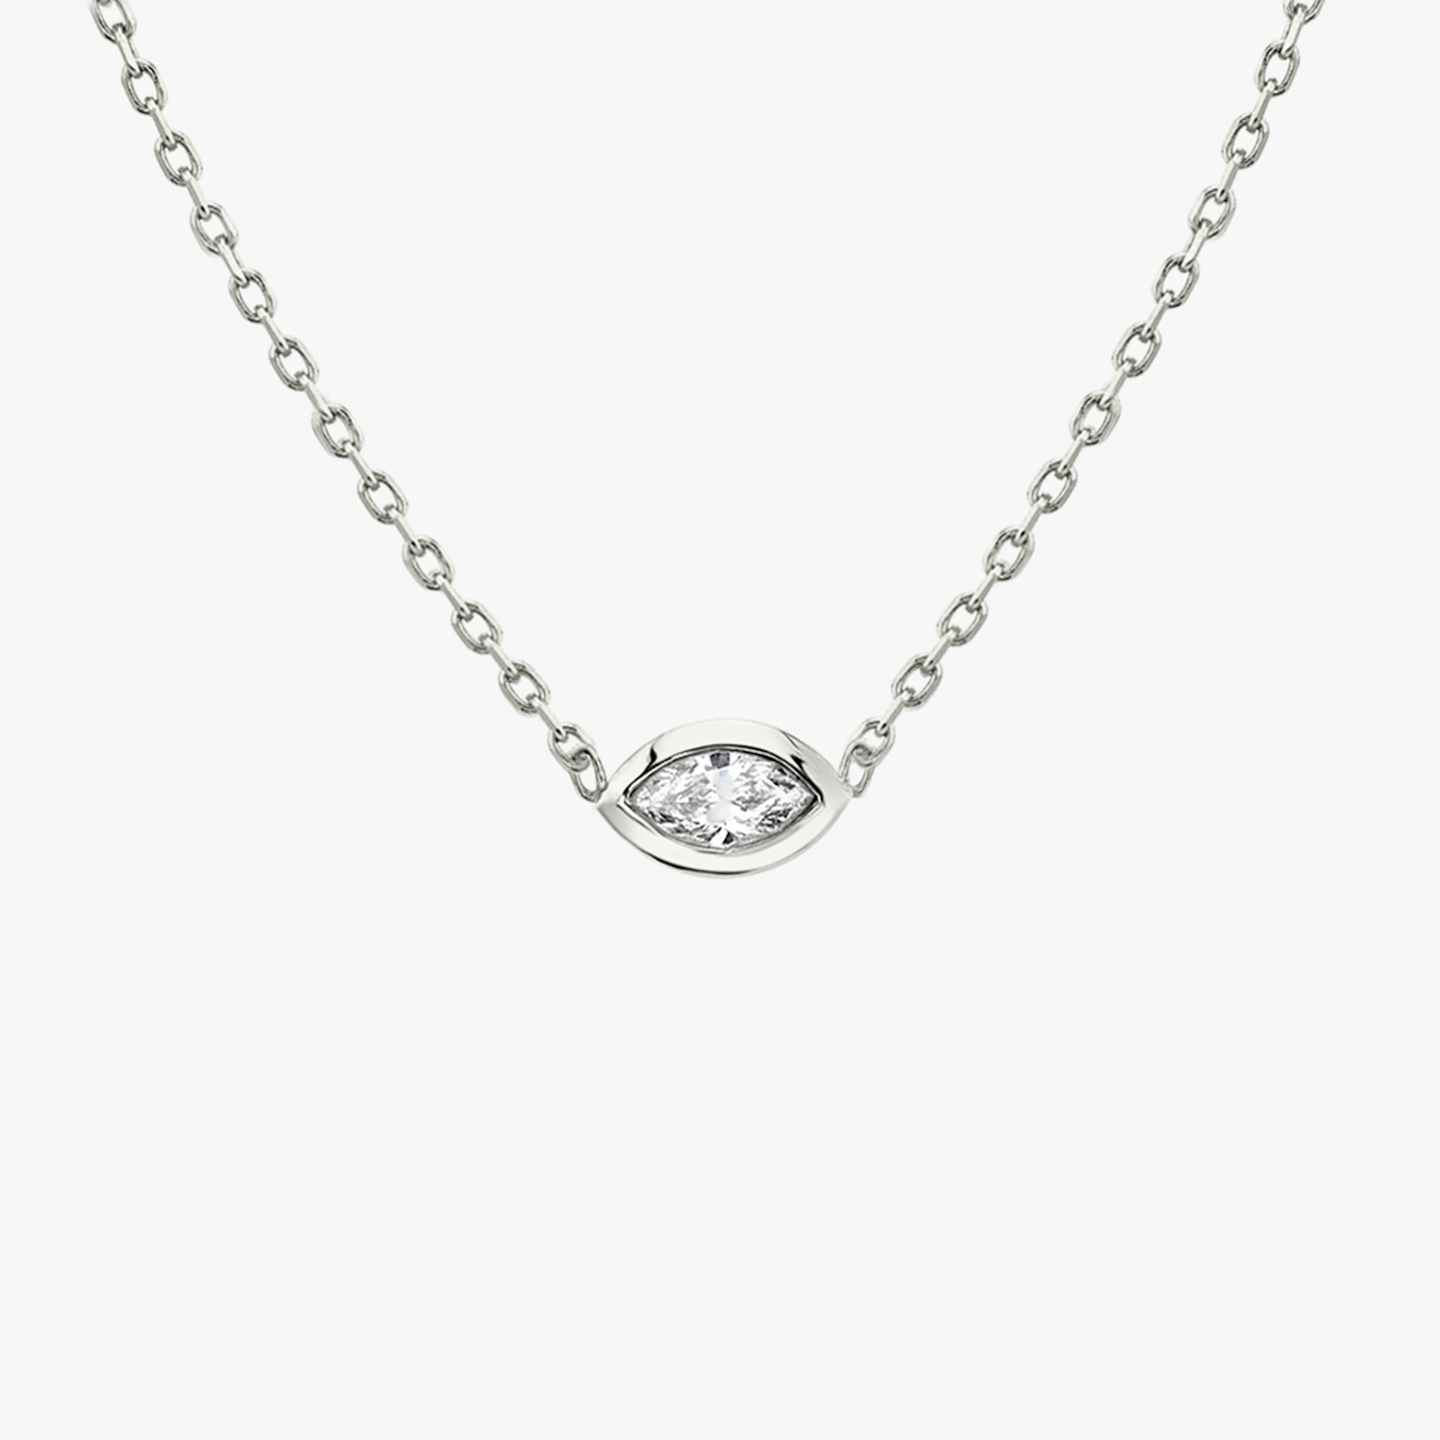 Closeup image of Diamond Bezel Necklace